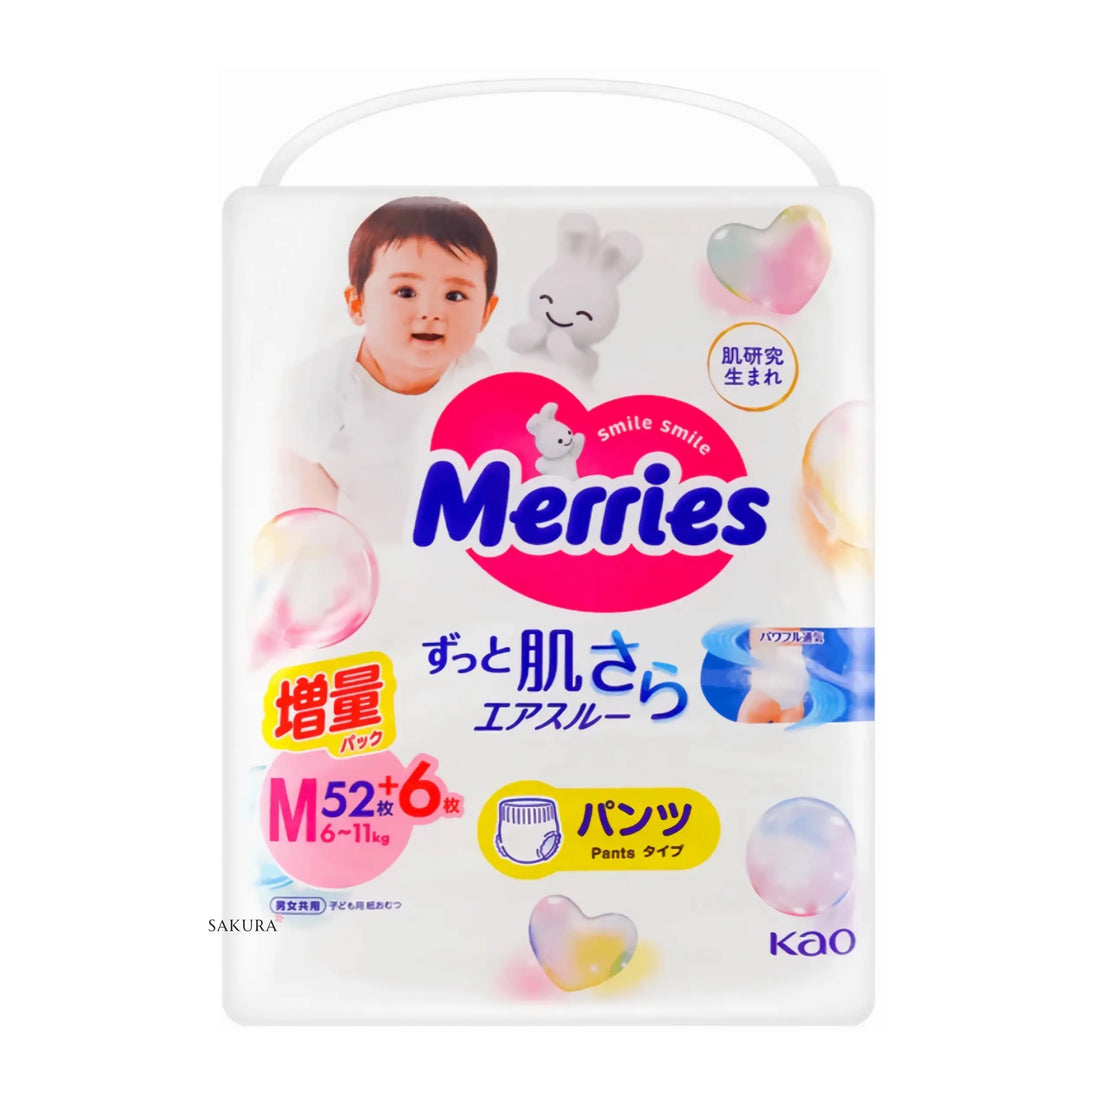 Merries Nappies JAPAN Pants M (6-11kg) 58pcs Value Pack